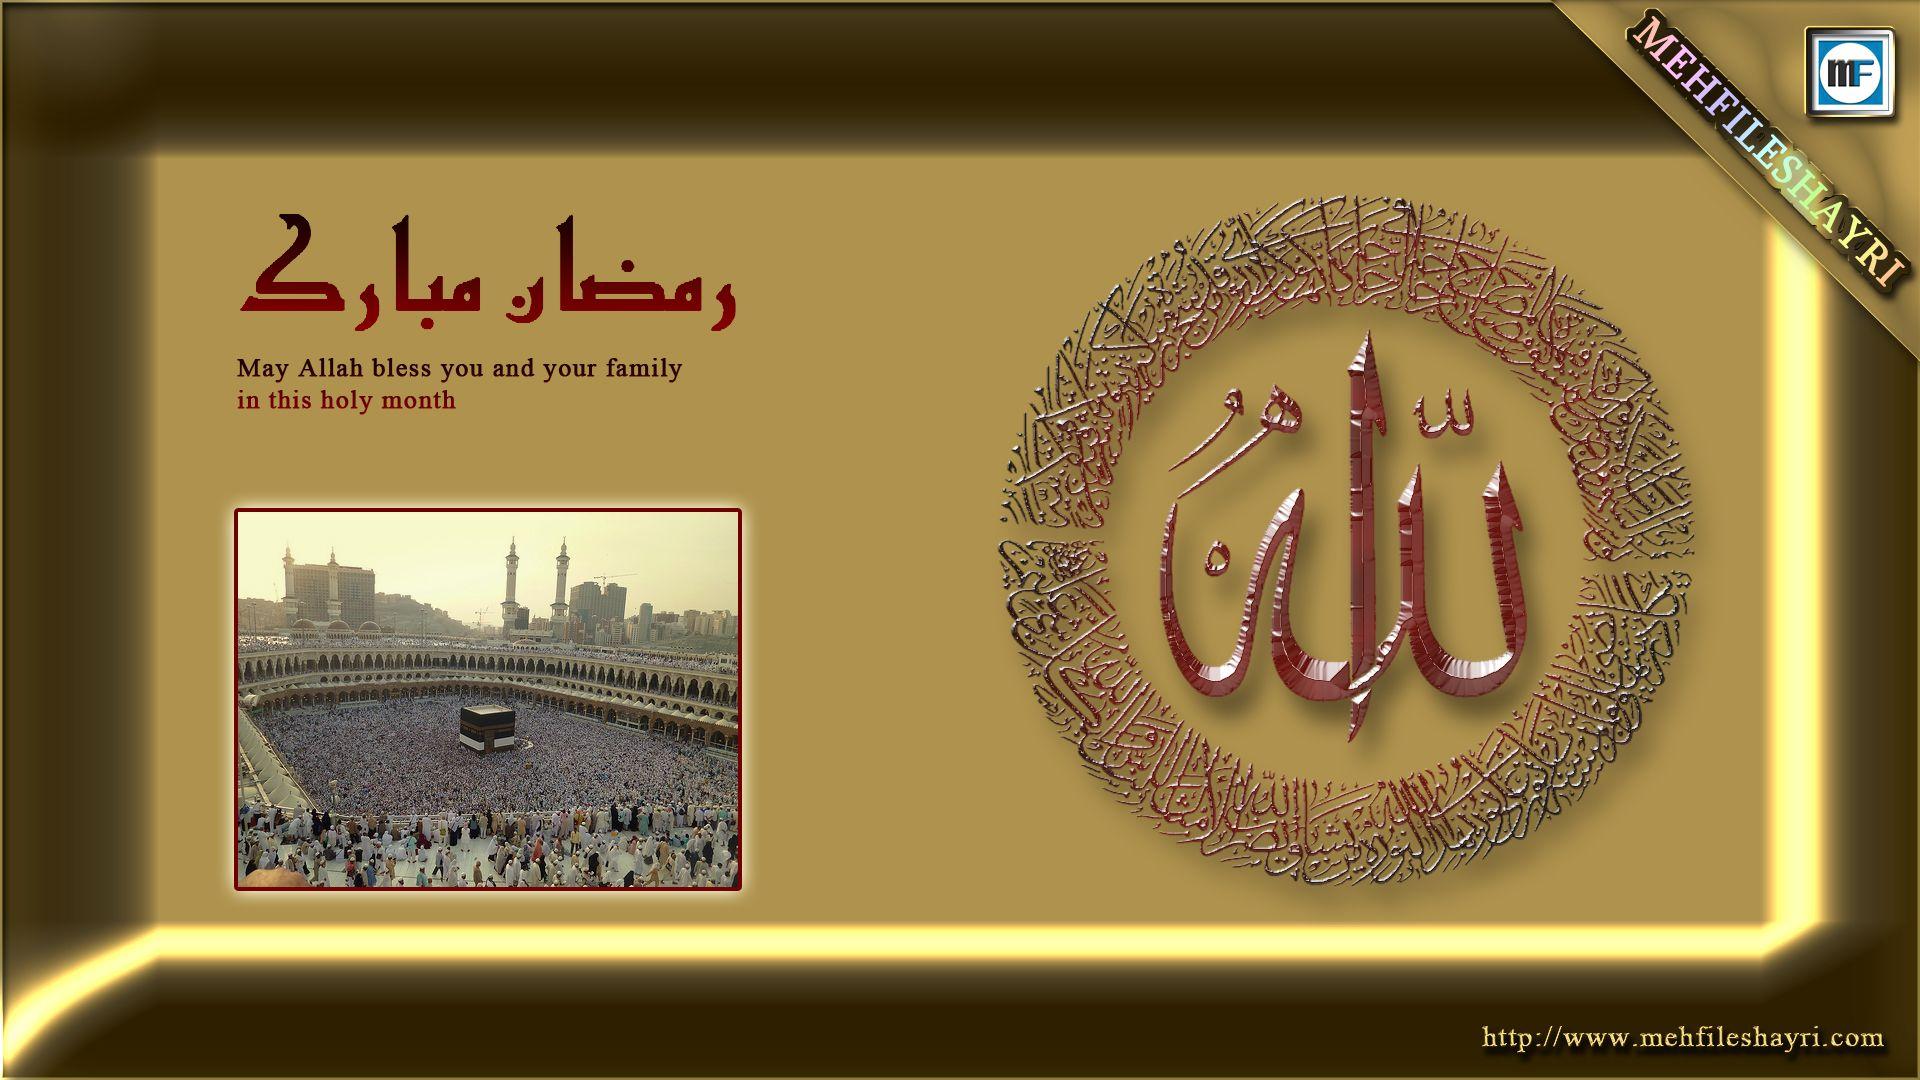 Islamic Photo Gallery. Download Islamic Image